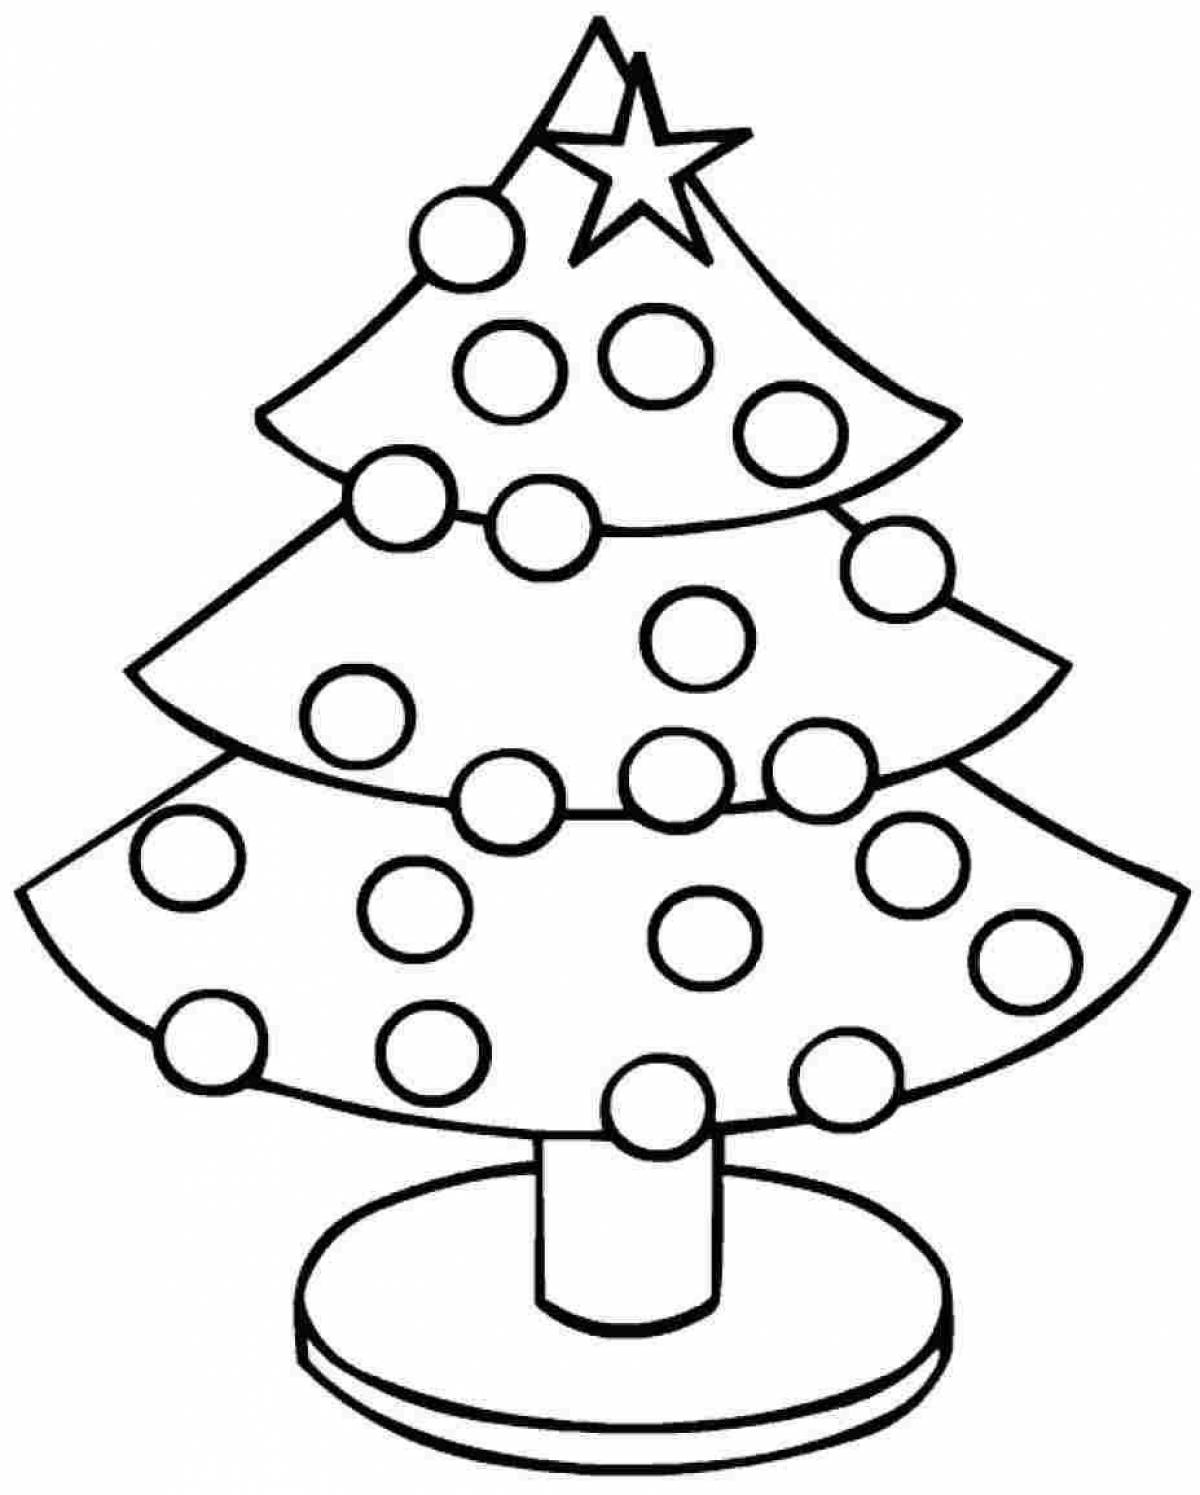 Christmas tree with scallops